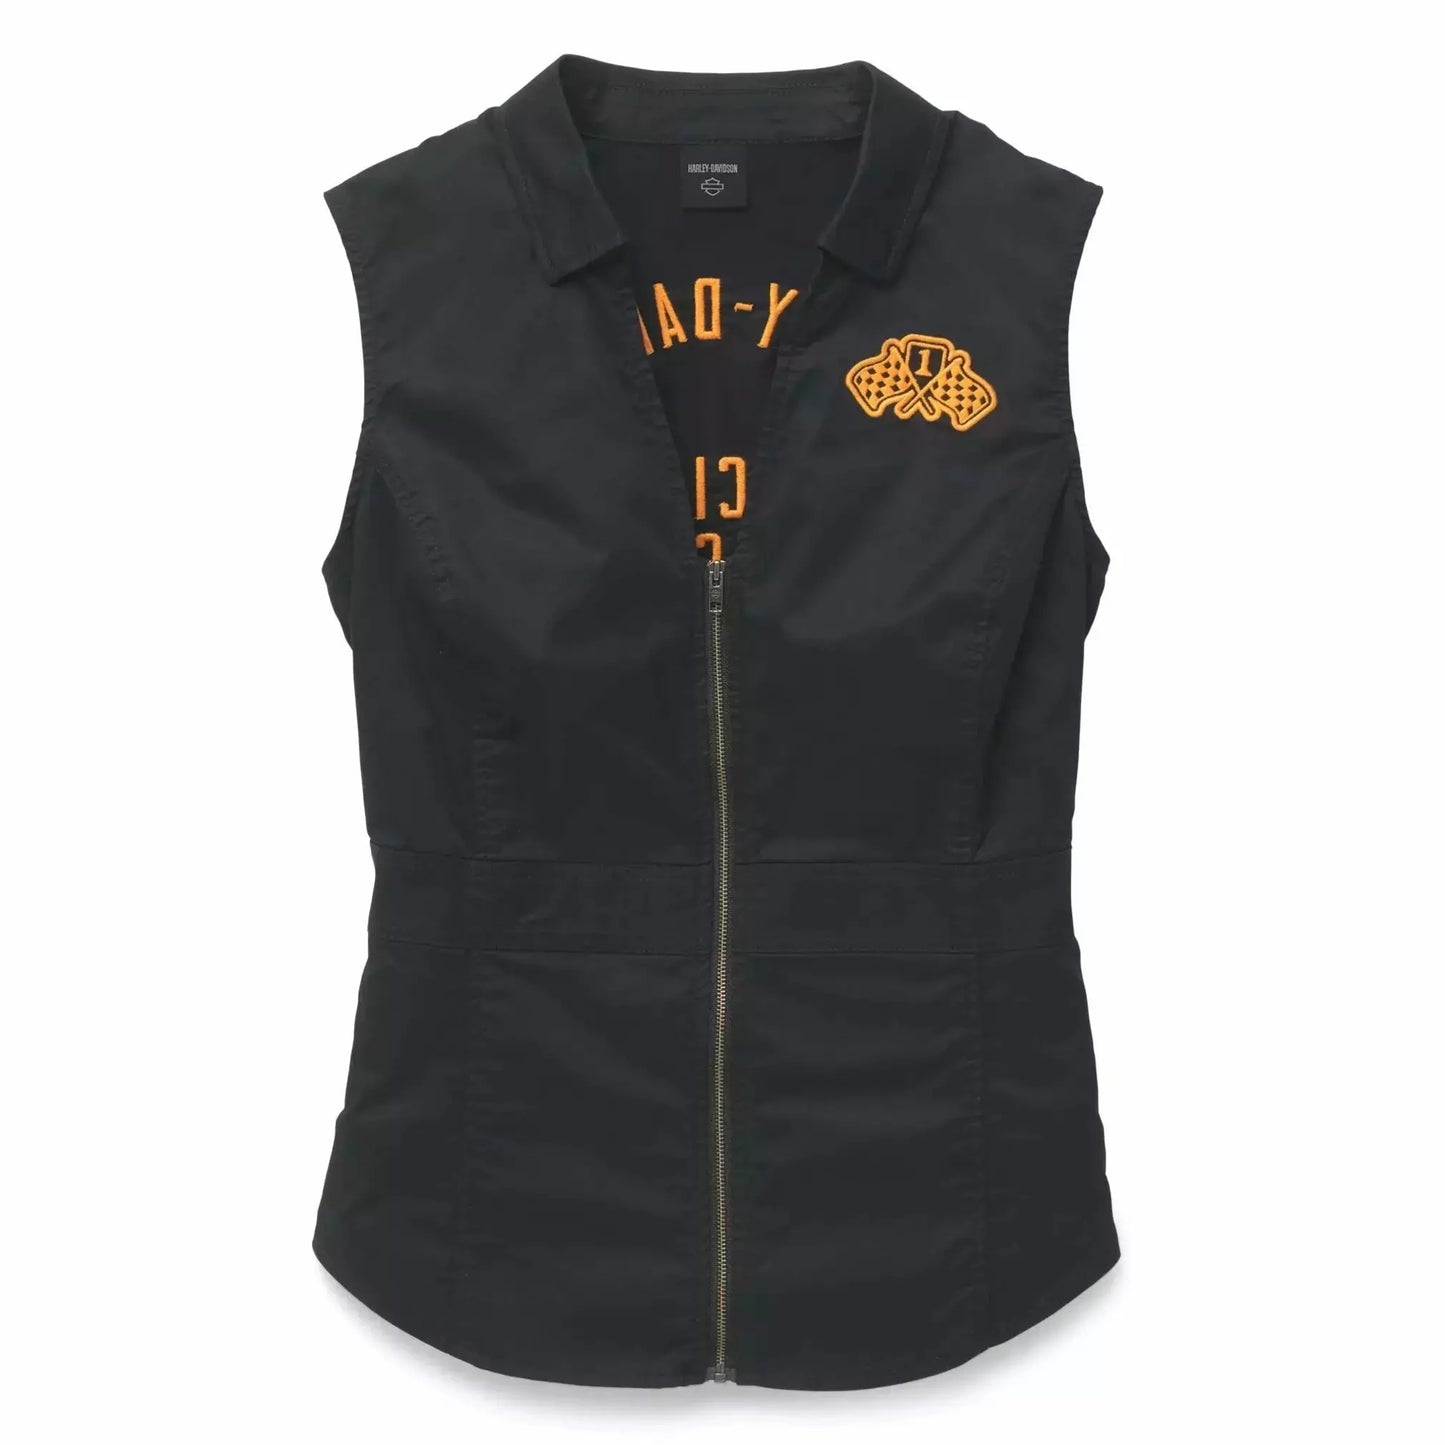 Harley Davidson® Women's Ritual Racing Sleeveless Shirt